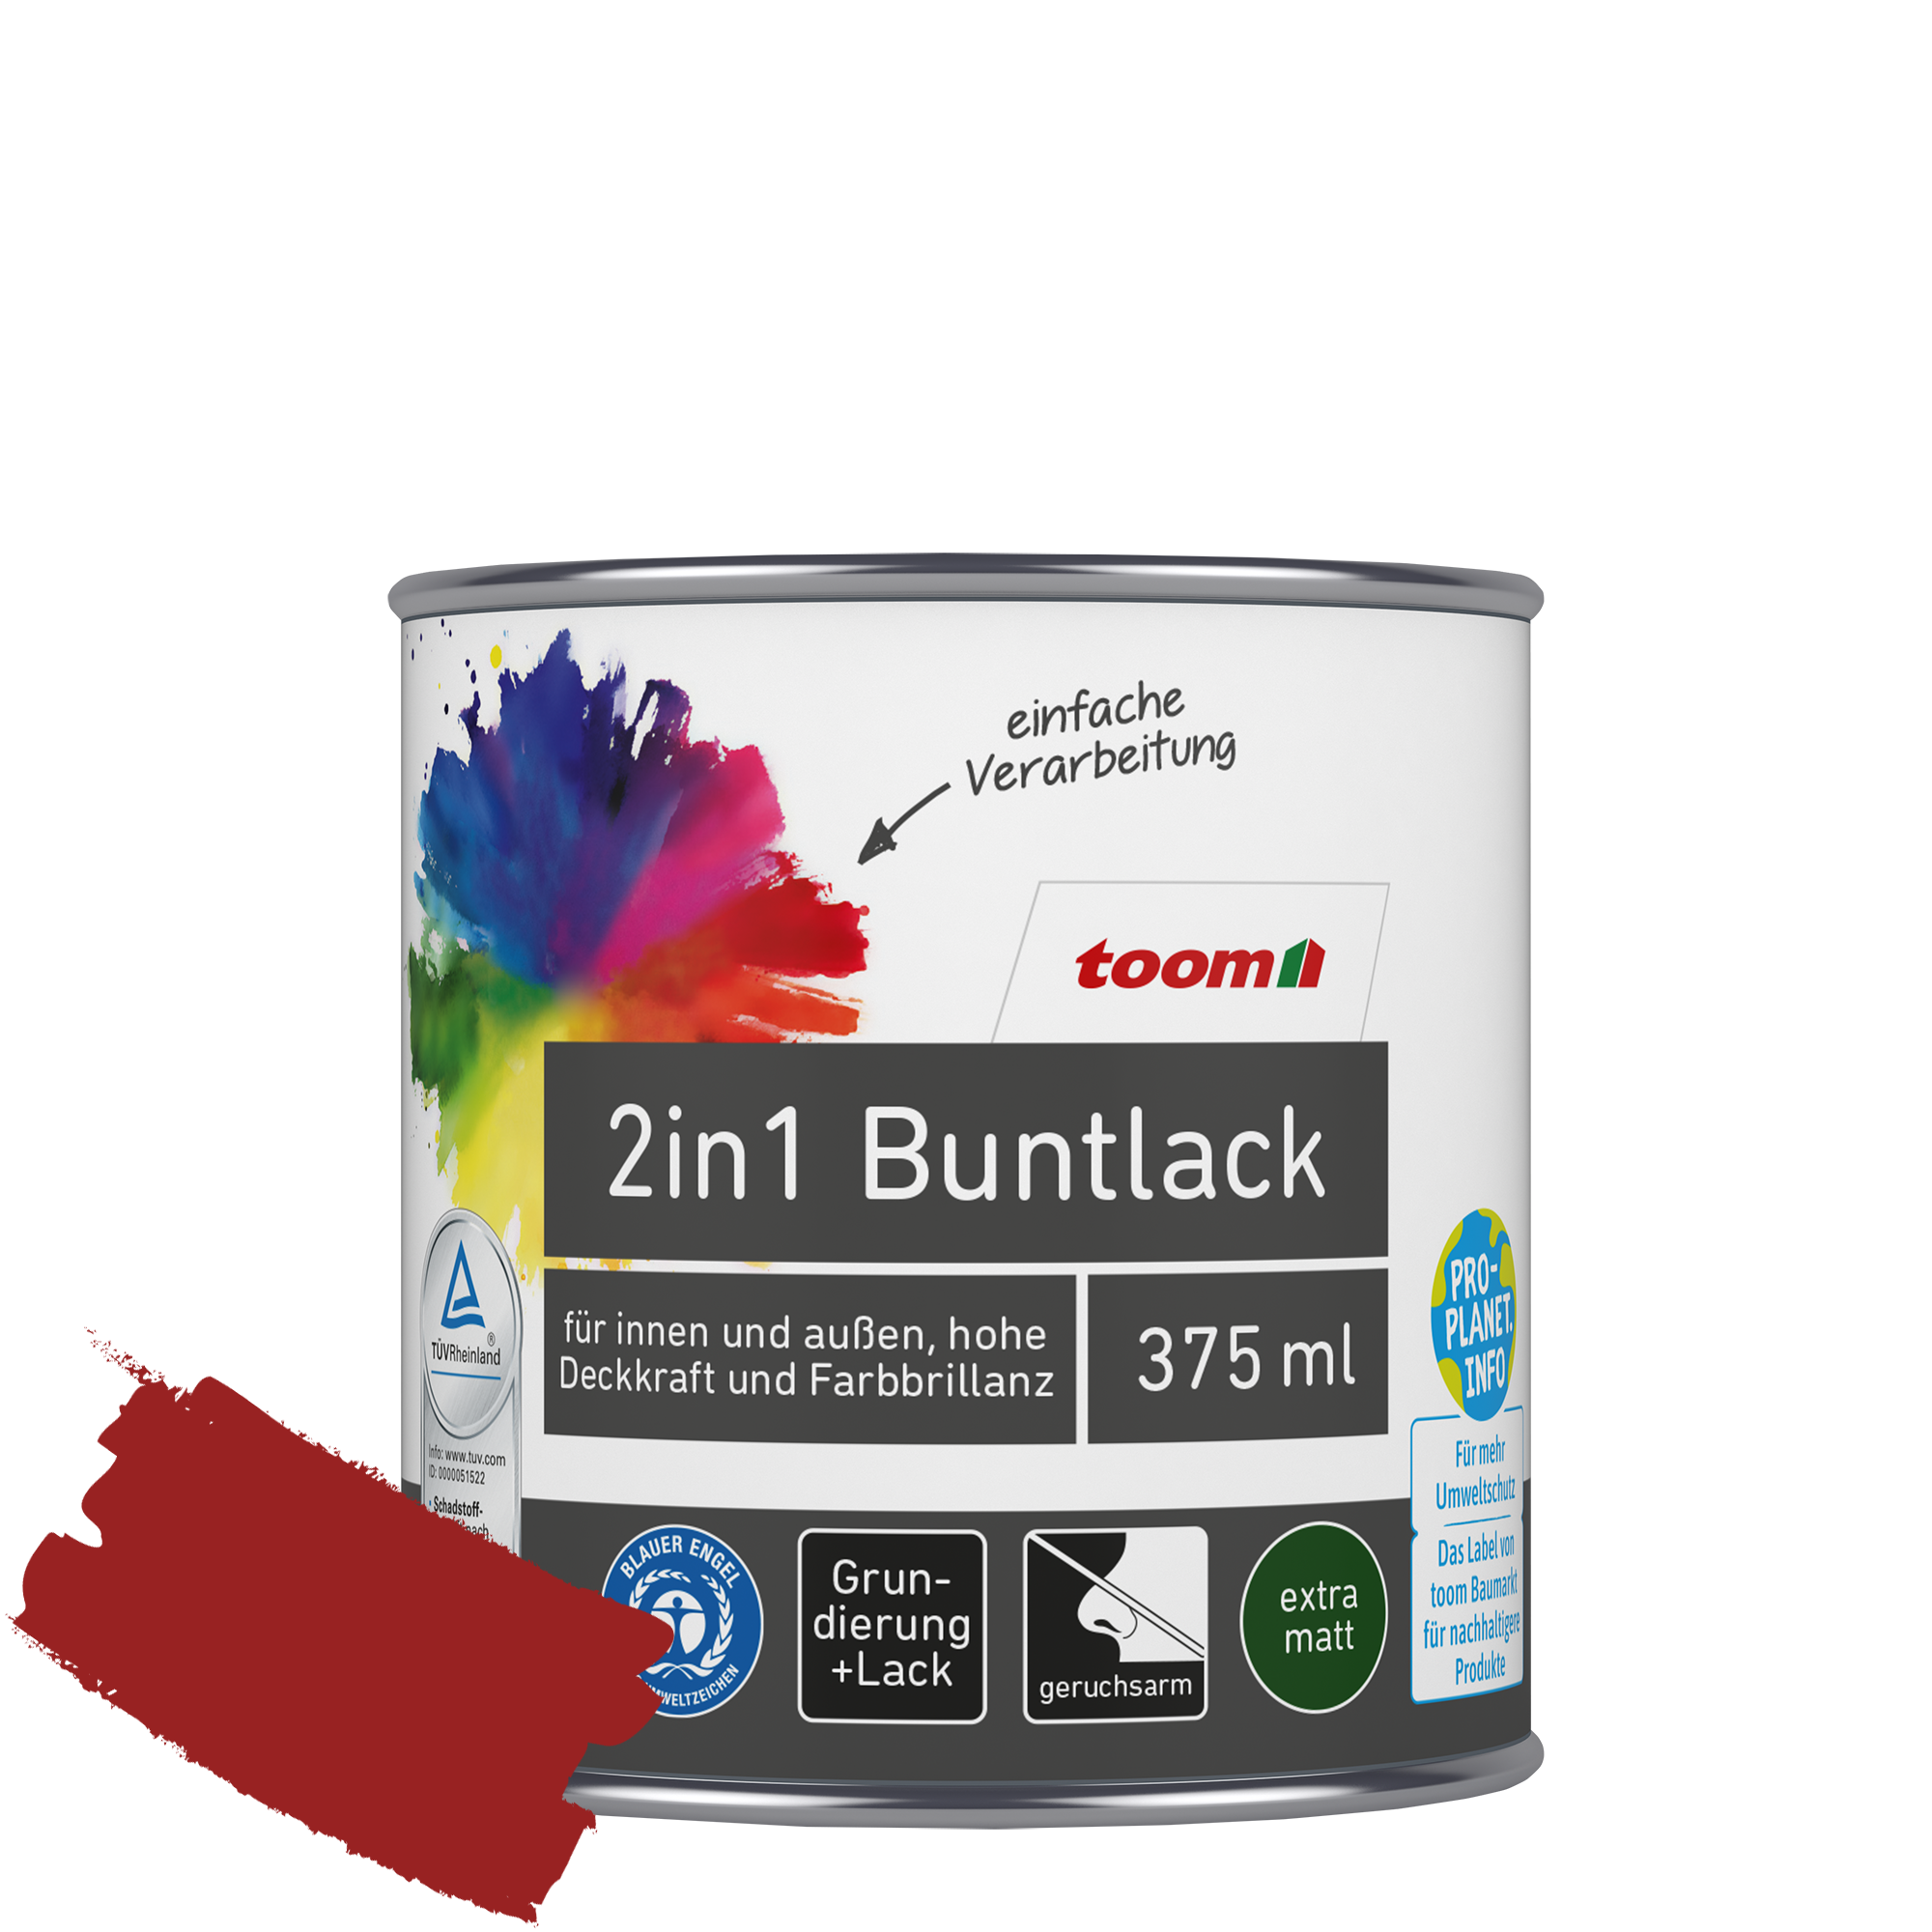 2in1 Buntlack 'Mohnblume' feuerrot matt 375 ml + product picture